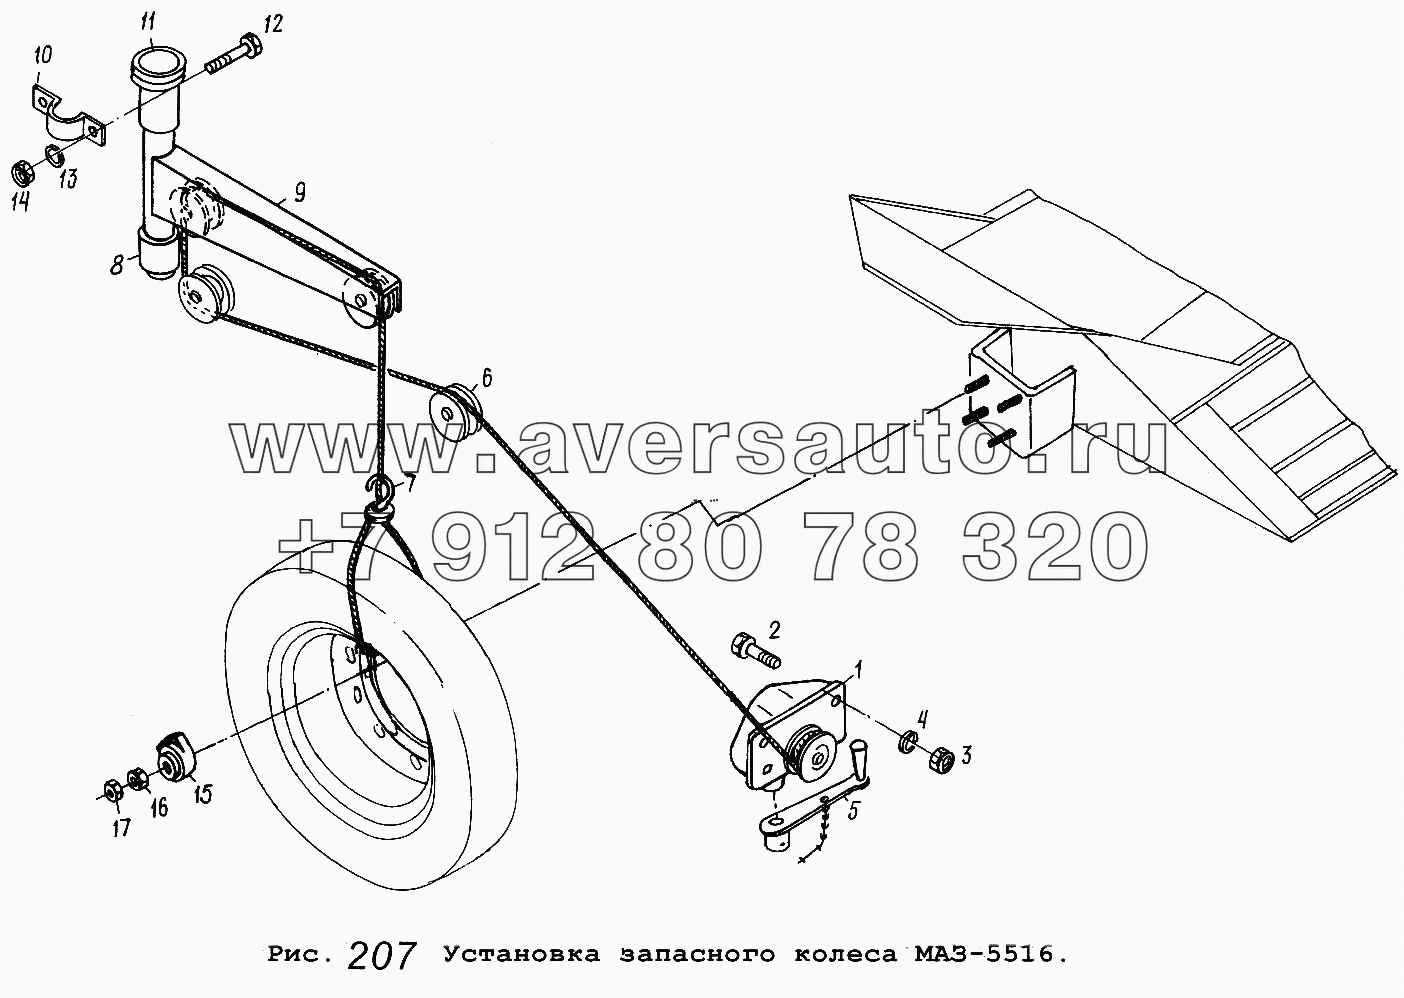 Установка запасного колеса МАЗ-5516